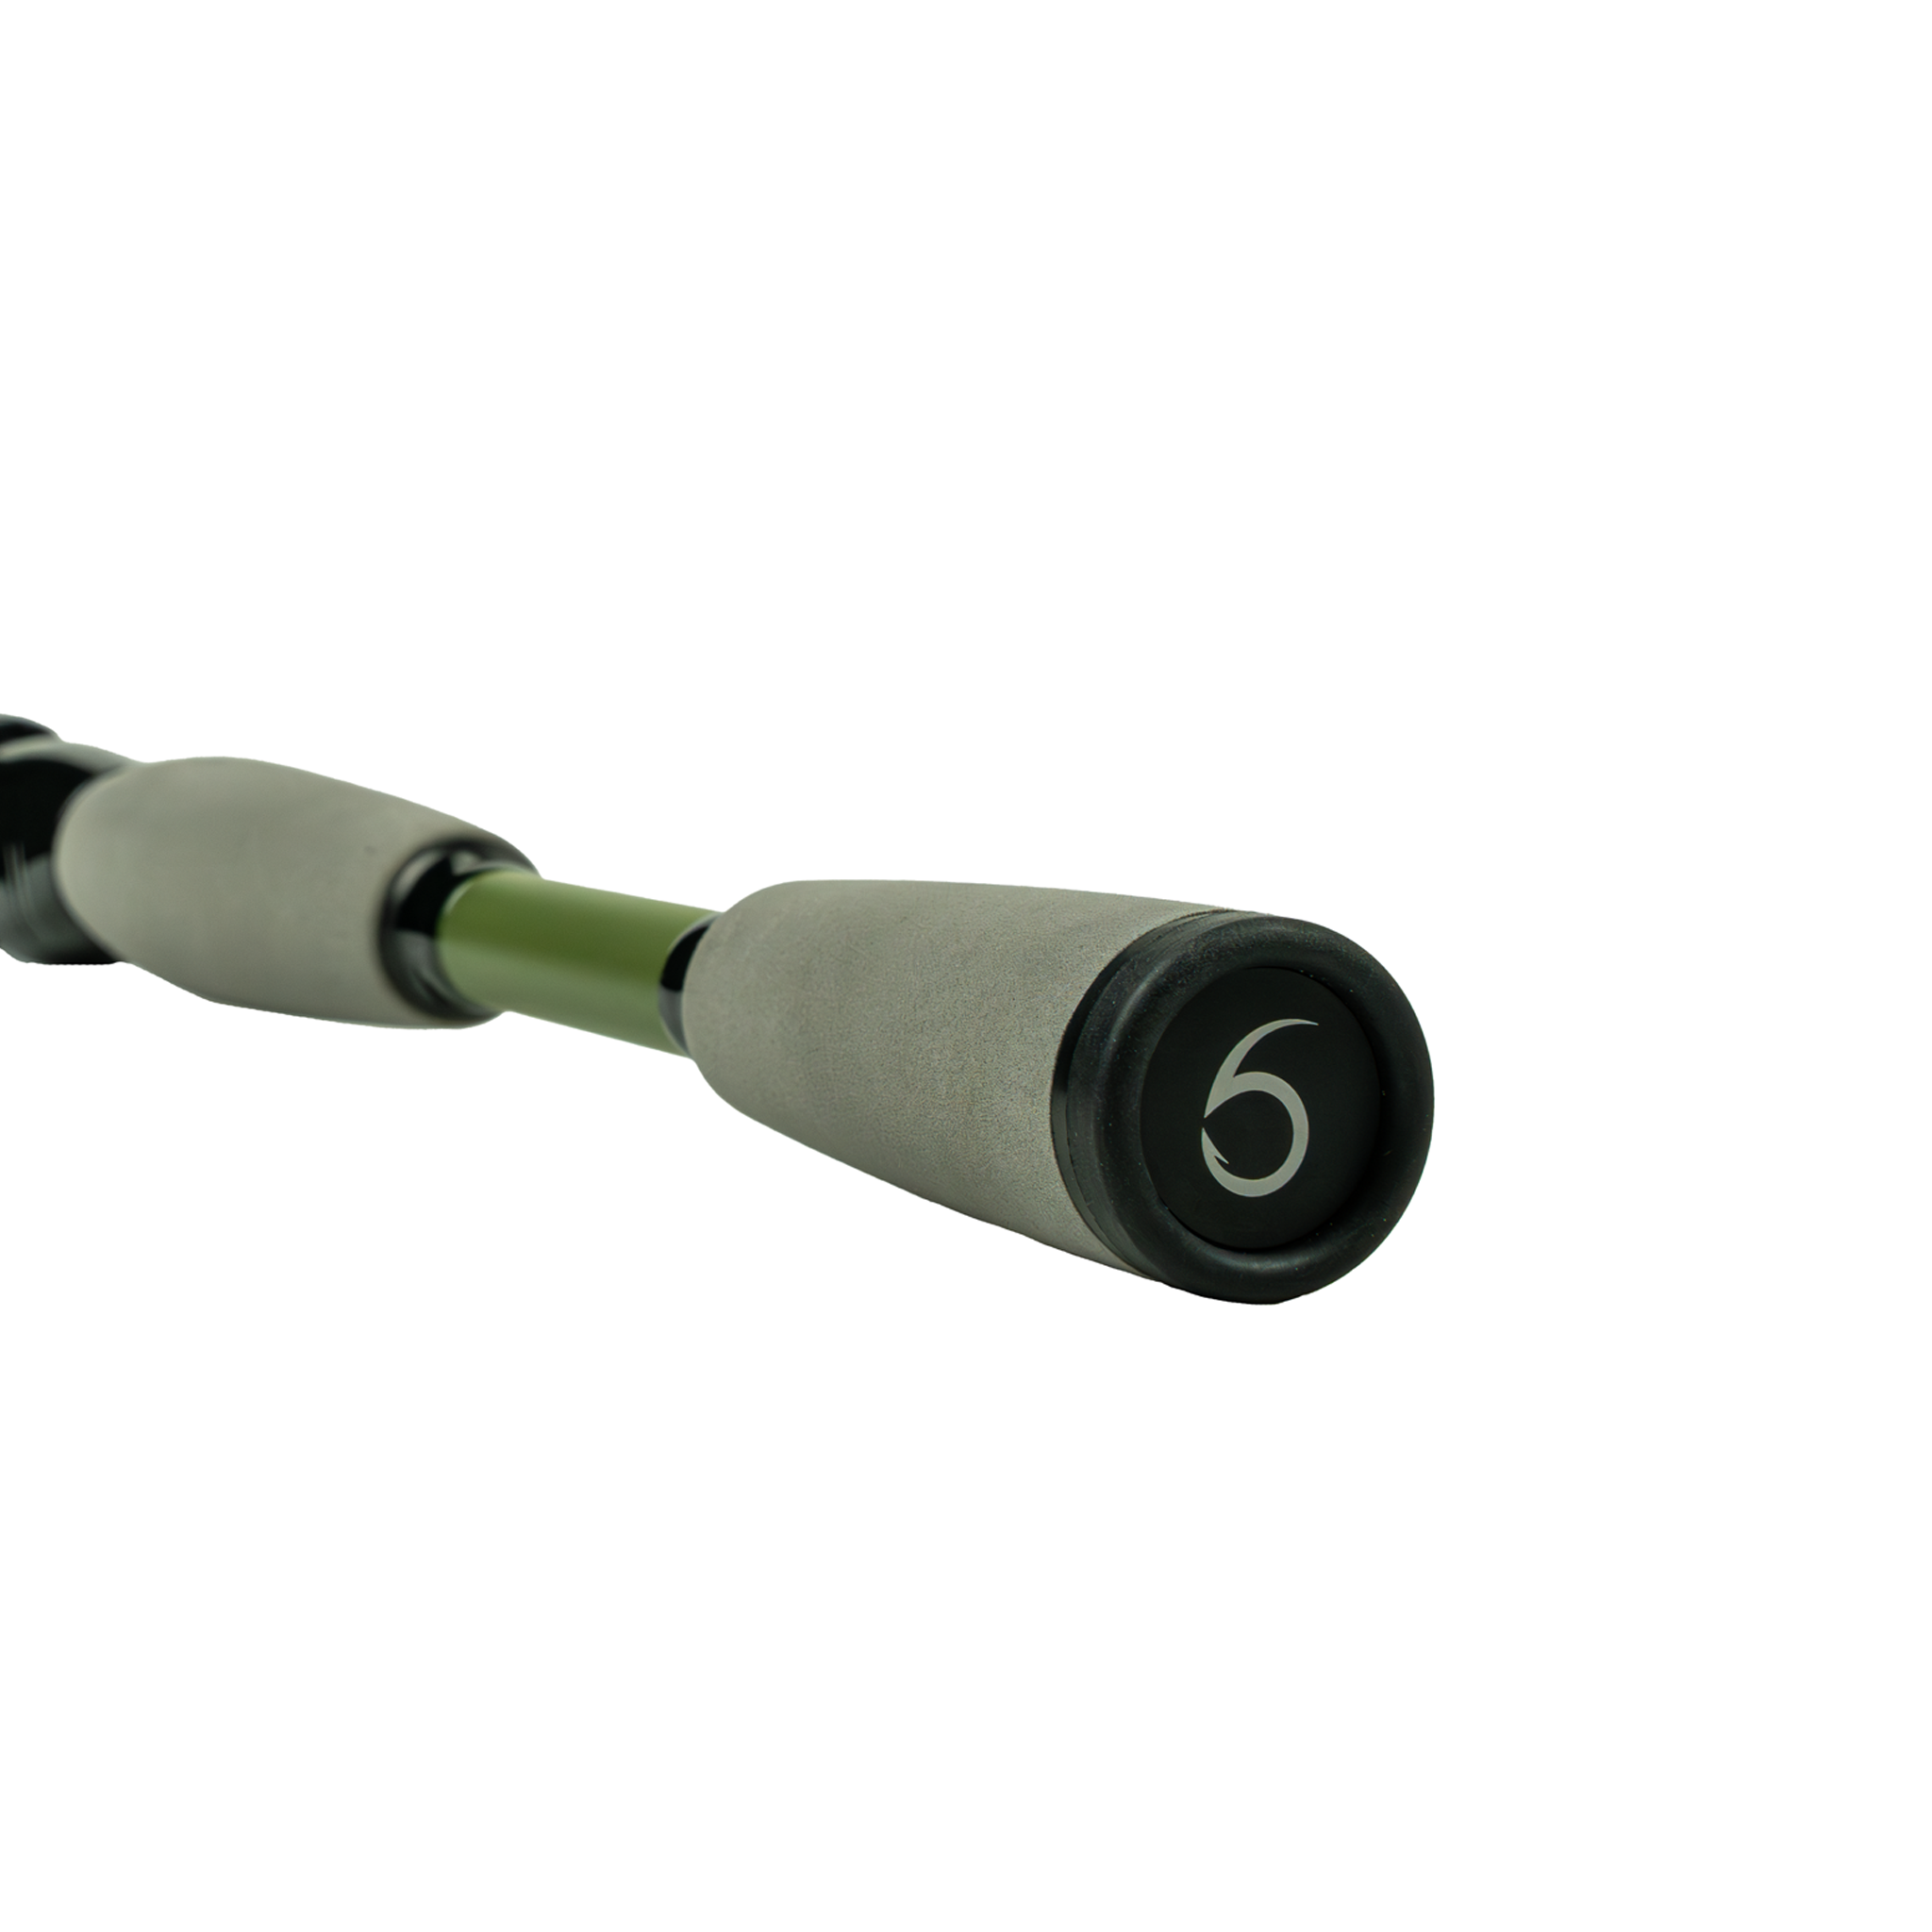 6th Sense Fishing - Stache Stick Rod Series - 6'6 Med-Light, Fast (Spinning Rod)